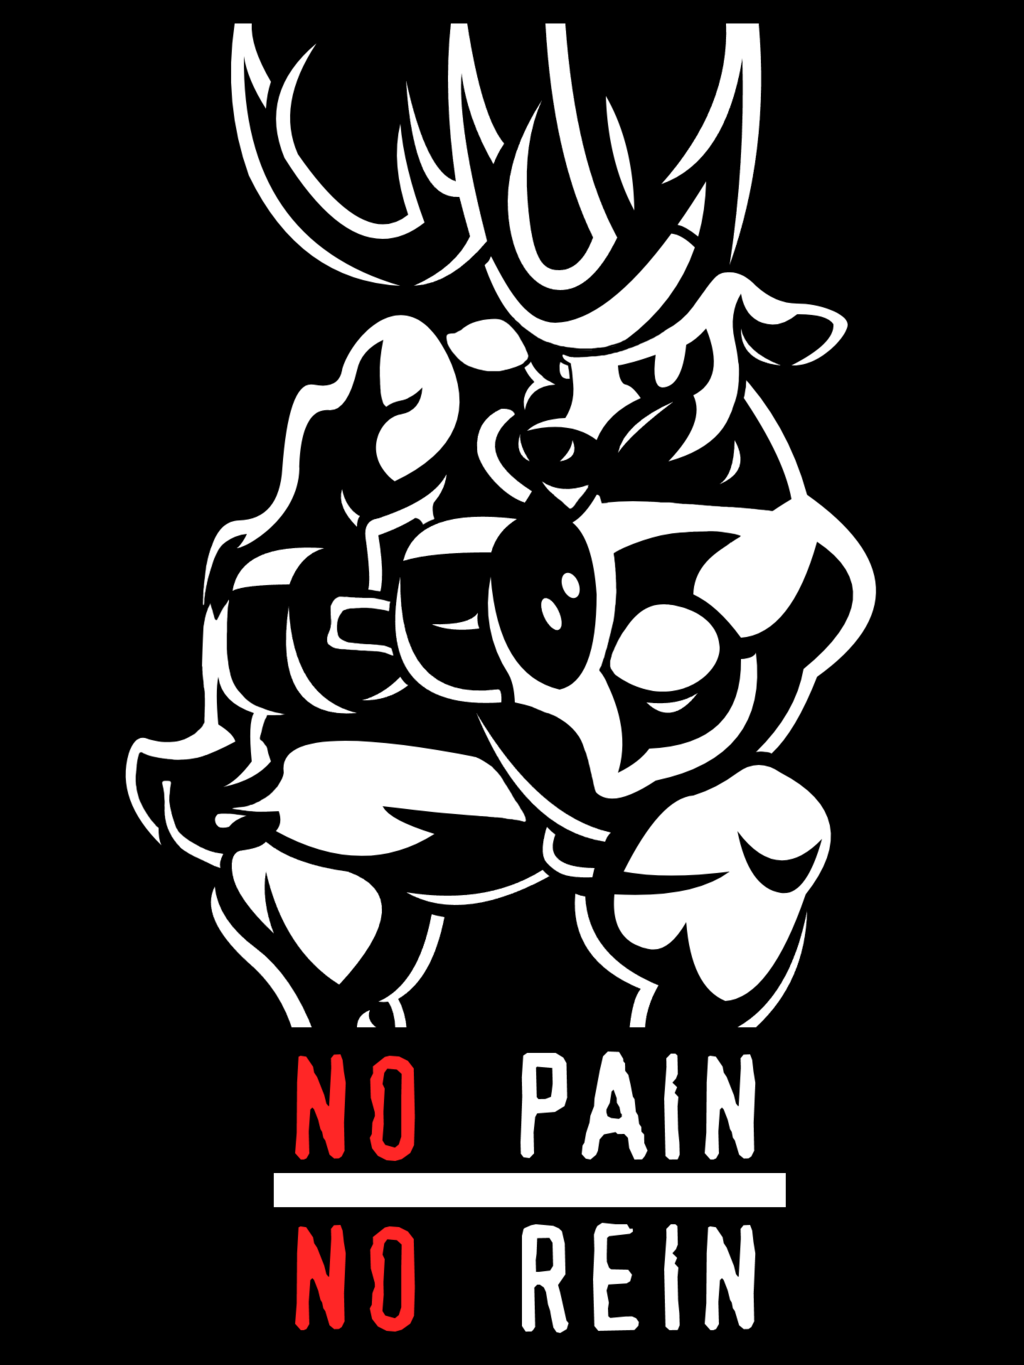 Most recent image: NO PAIN NO REIN